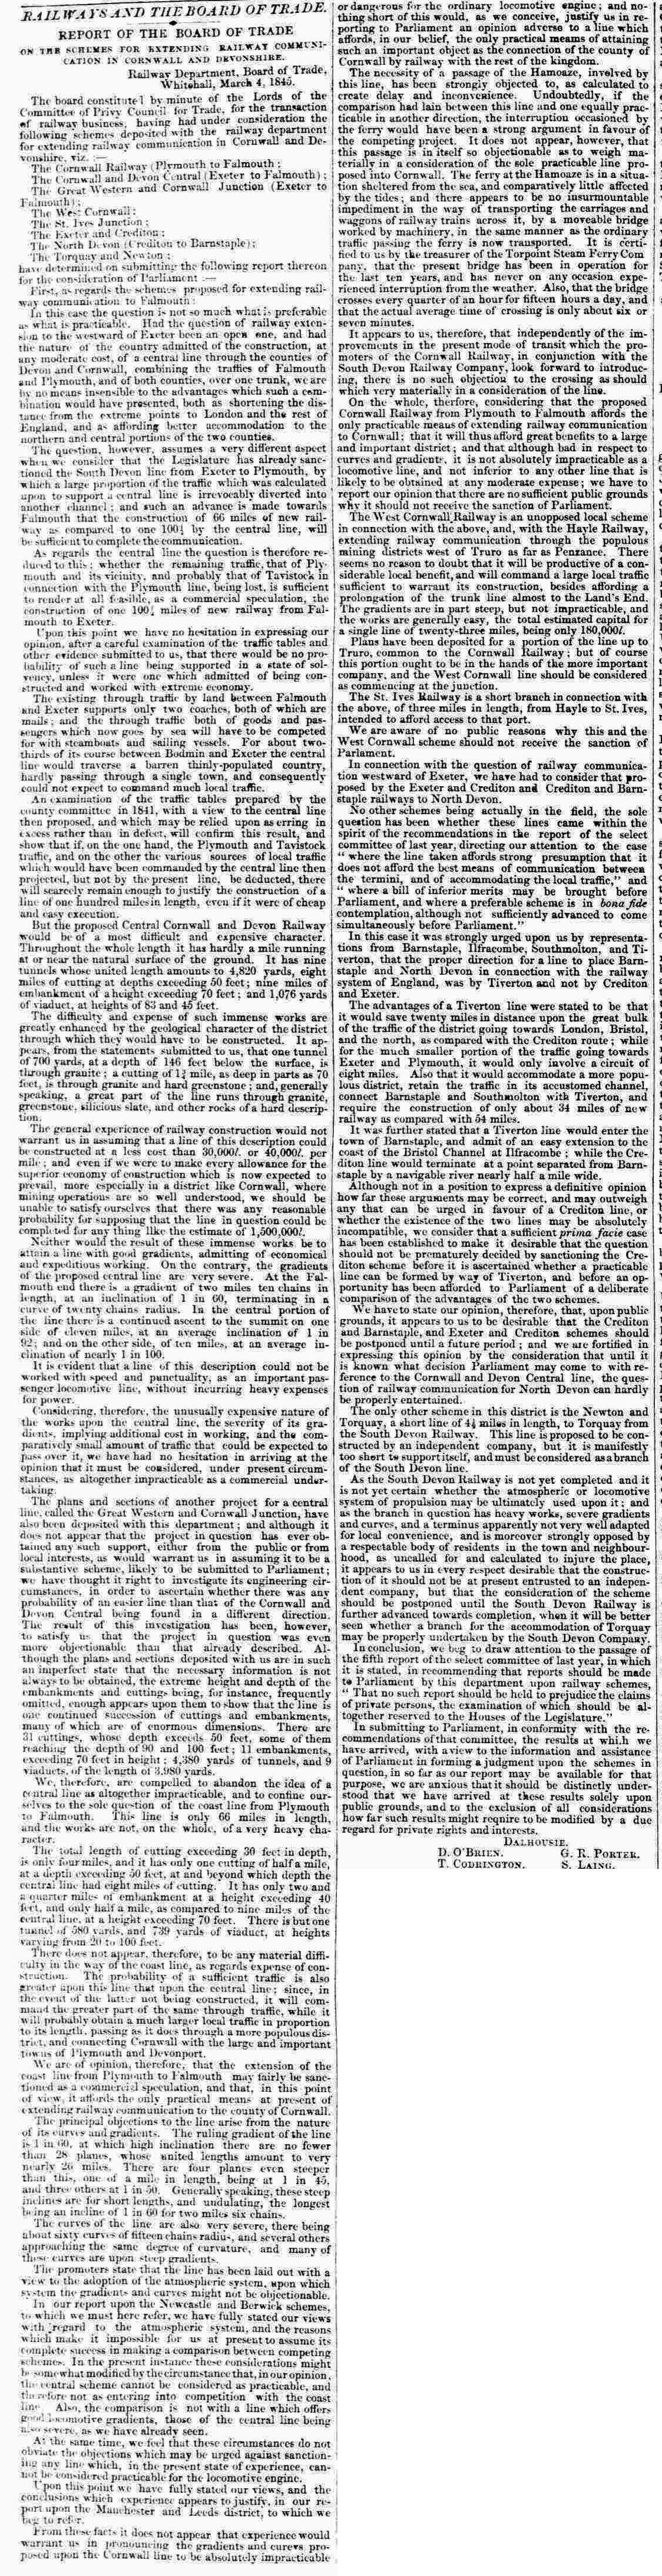 Board of Trade report 07 March 1845